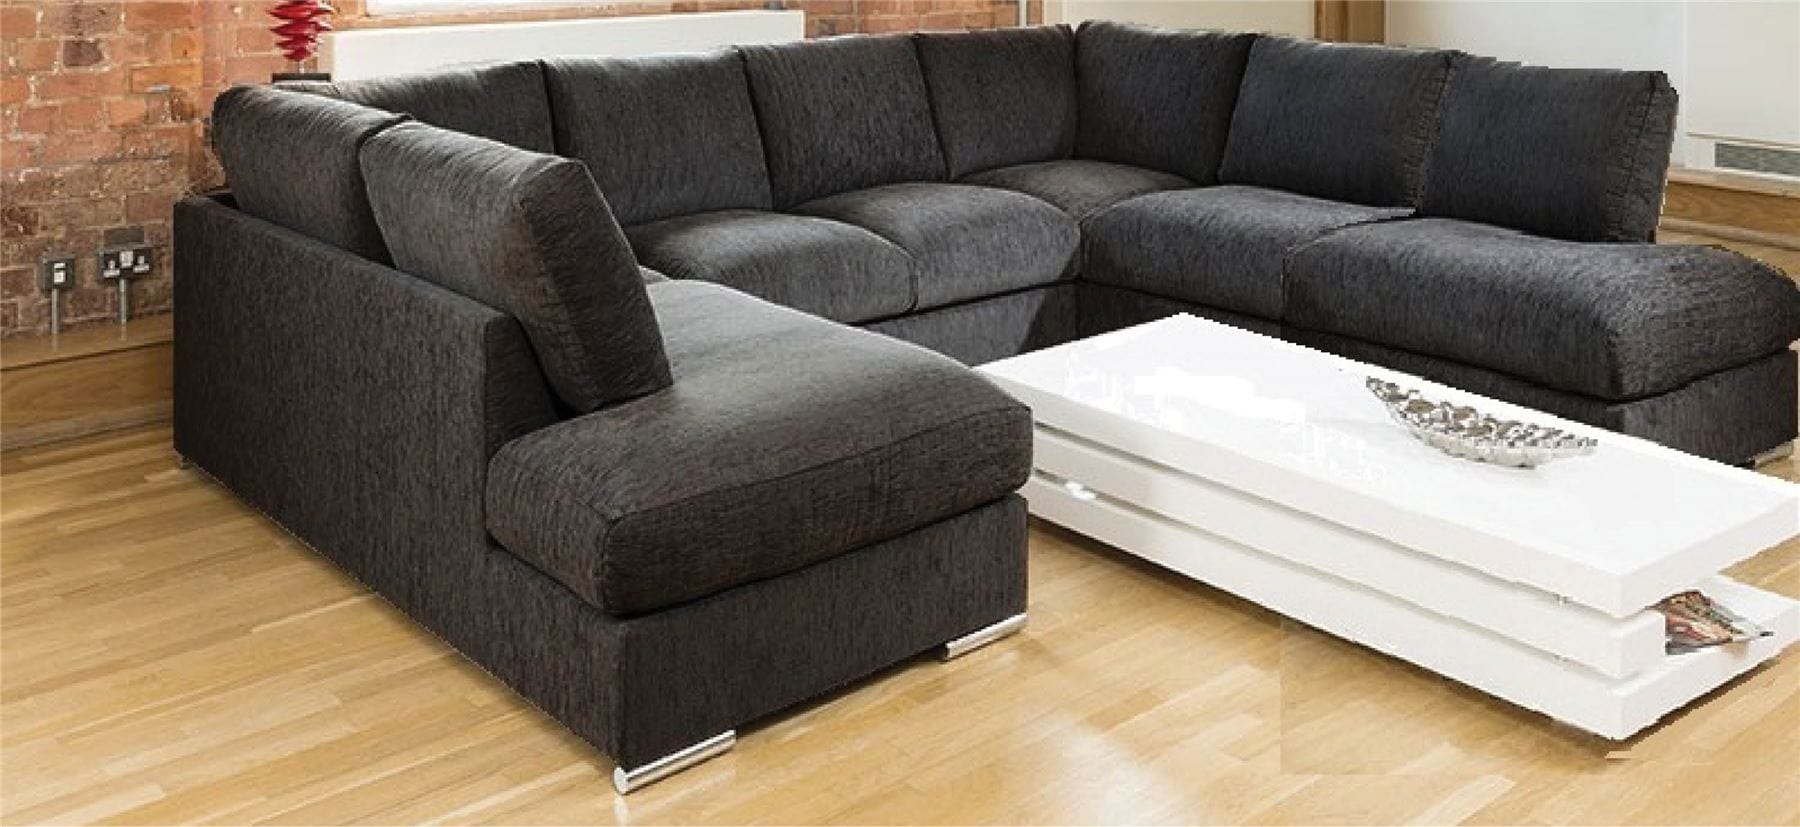 Quatropi Quatropi Large Sofa Set Settee Corner Group U Shape Grey 3.3 x 2.9m